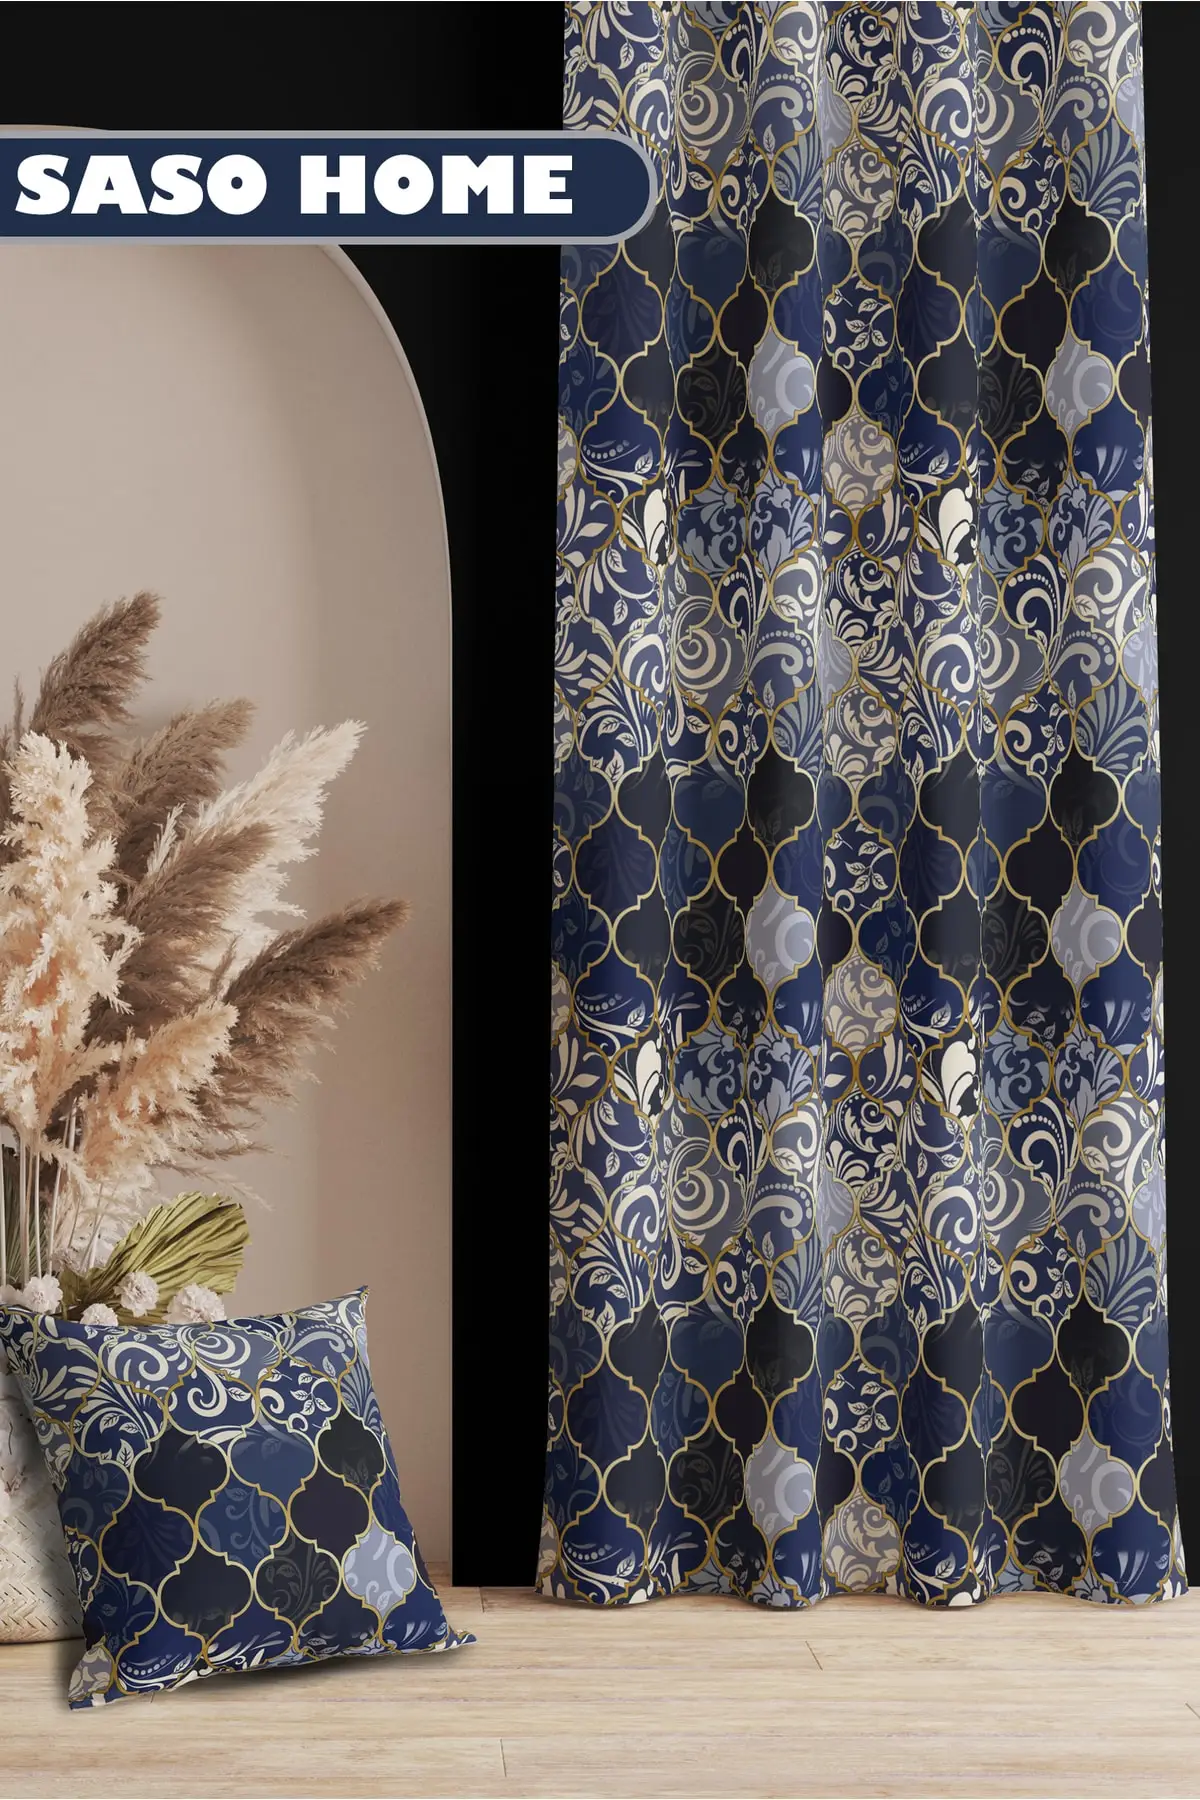 

Curtain Ottoman Ethnic Tile Pattern Patterned 140 X 270 Cm Mosaic Patterned Digital Printed Background Single Sash